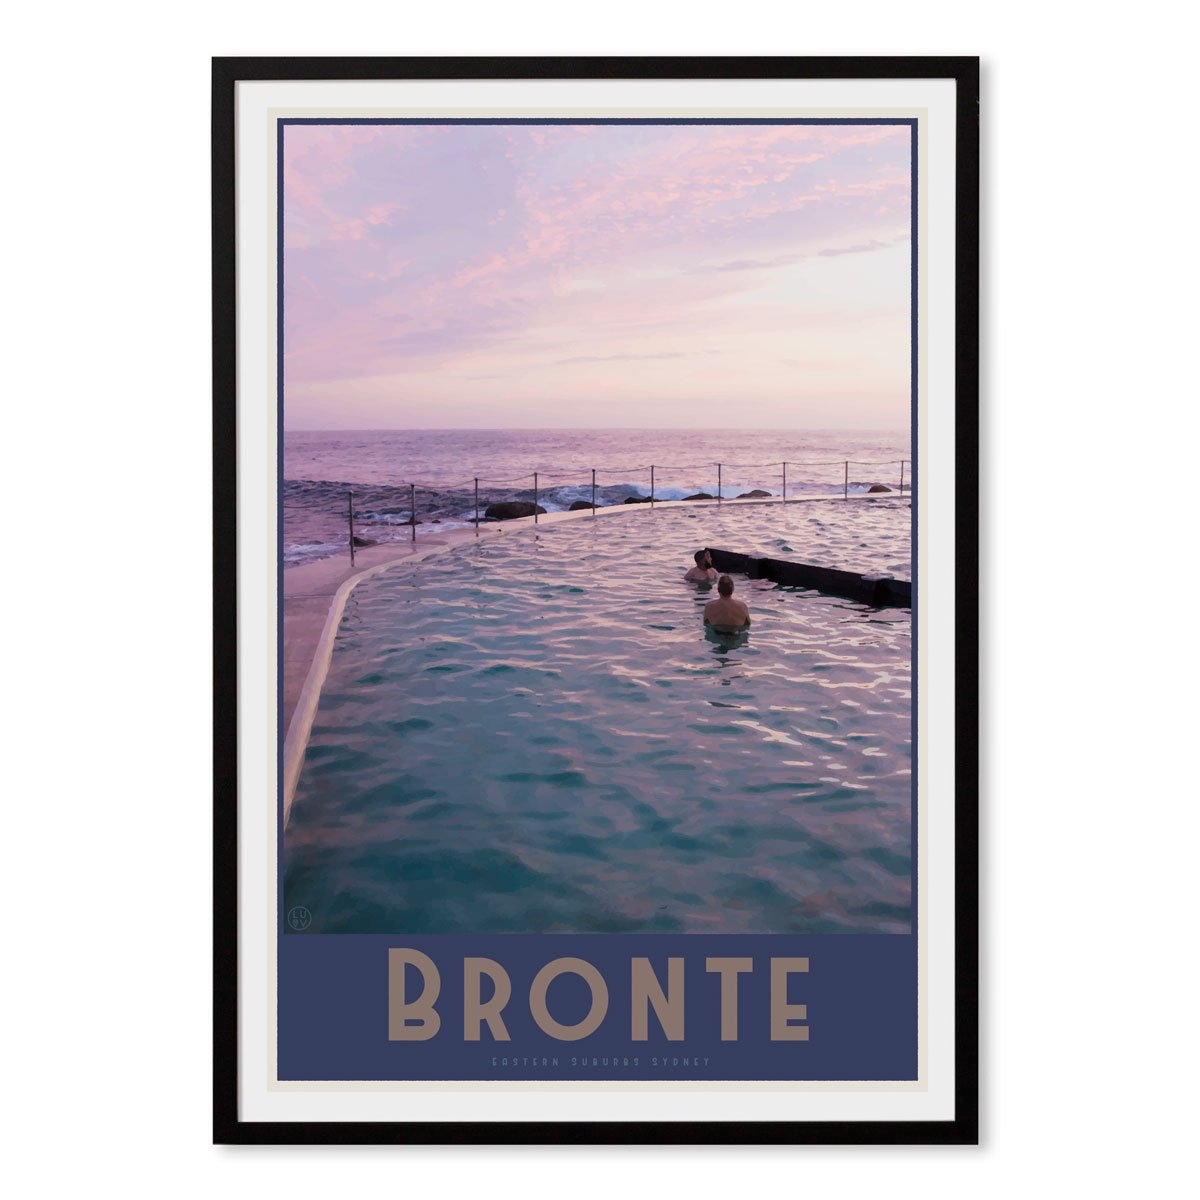 Bronte vintage travel style black framed prints by places we luv